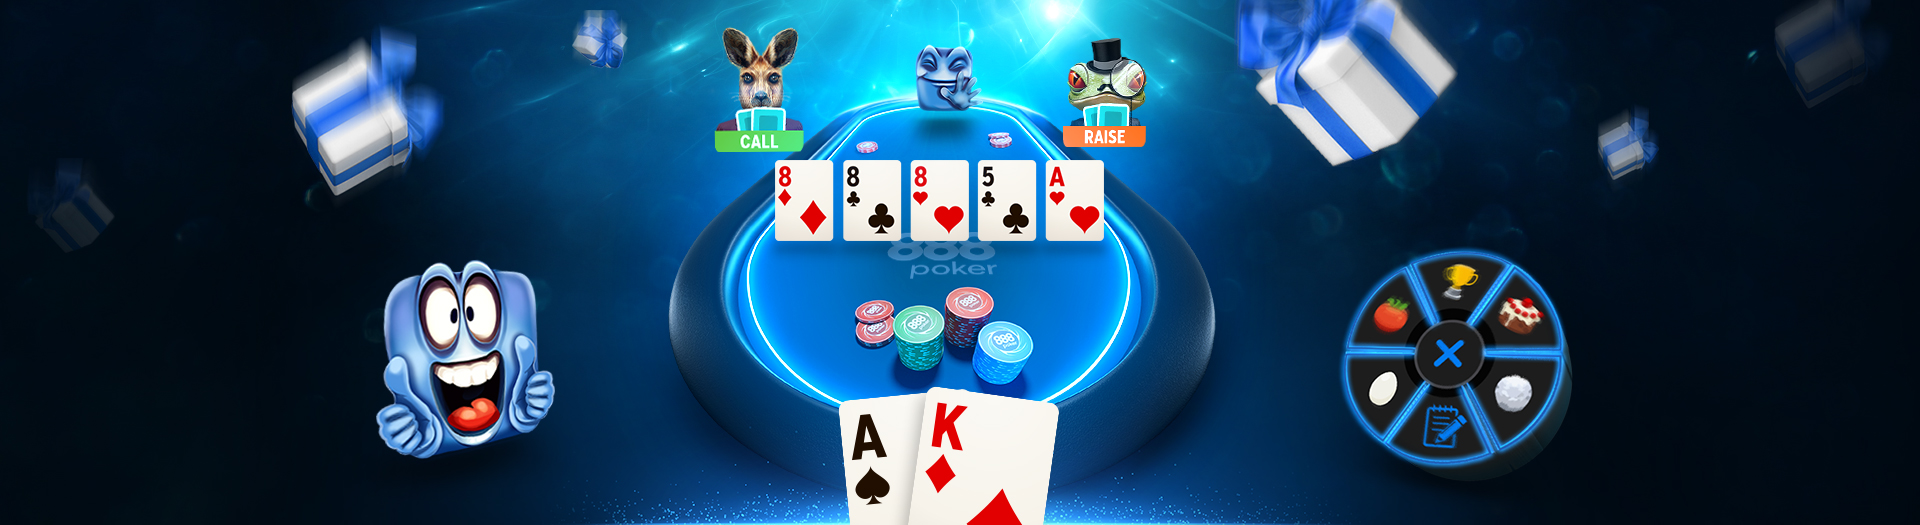 TS-43644-Poker-8-Launch-LP-image-1600767511450_tcm1488-497727